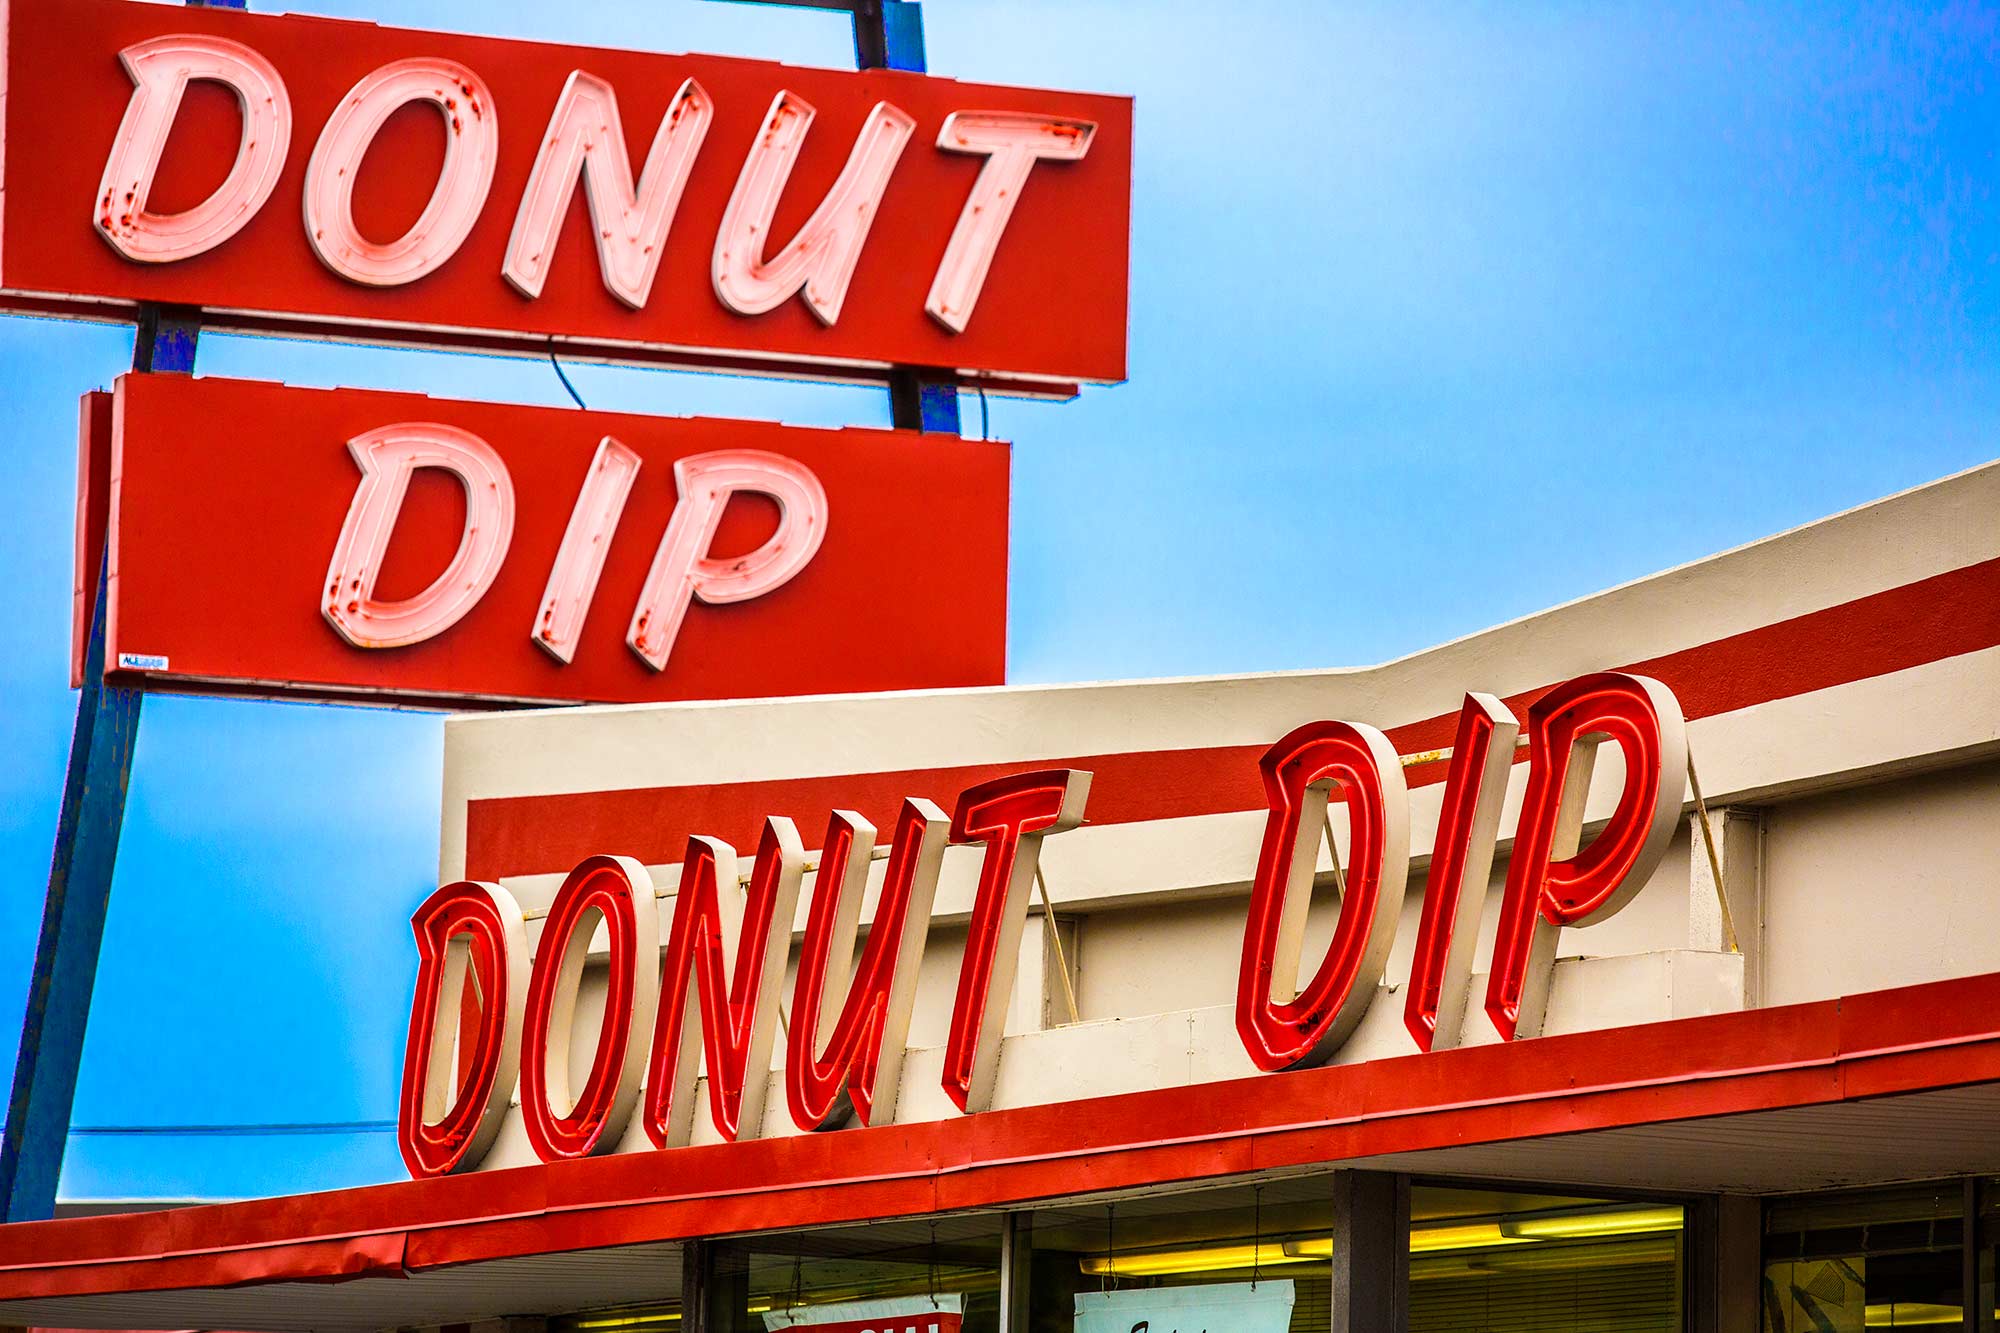 Donut Dip, West Springfield, MA - 10/3/15